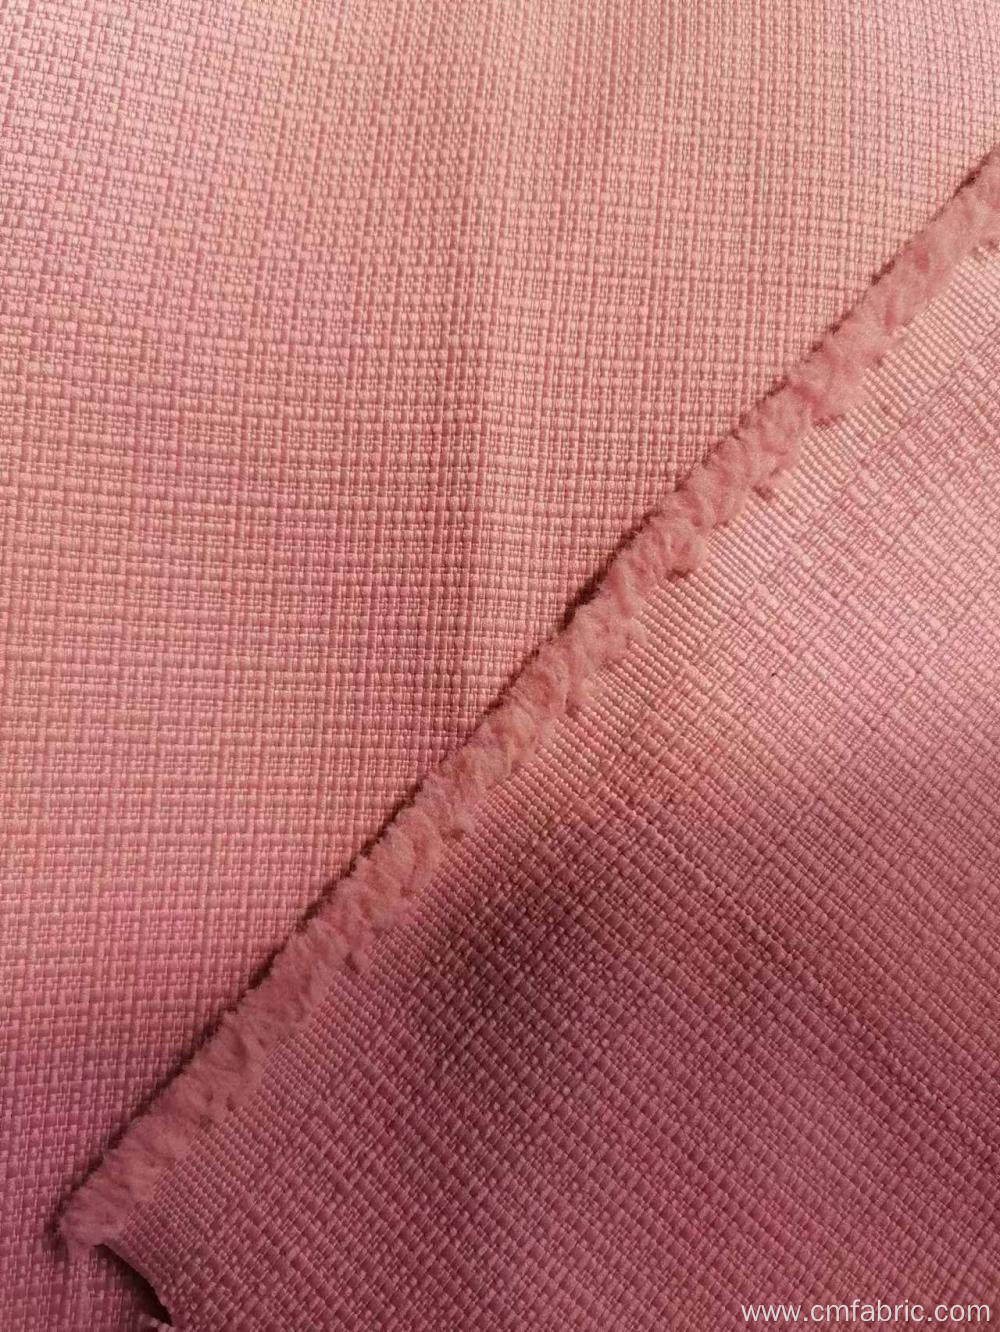 100% Polyester woven textured slub chic style fabric